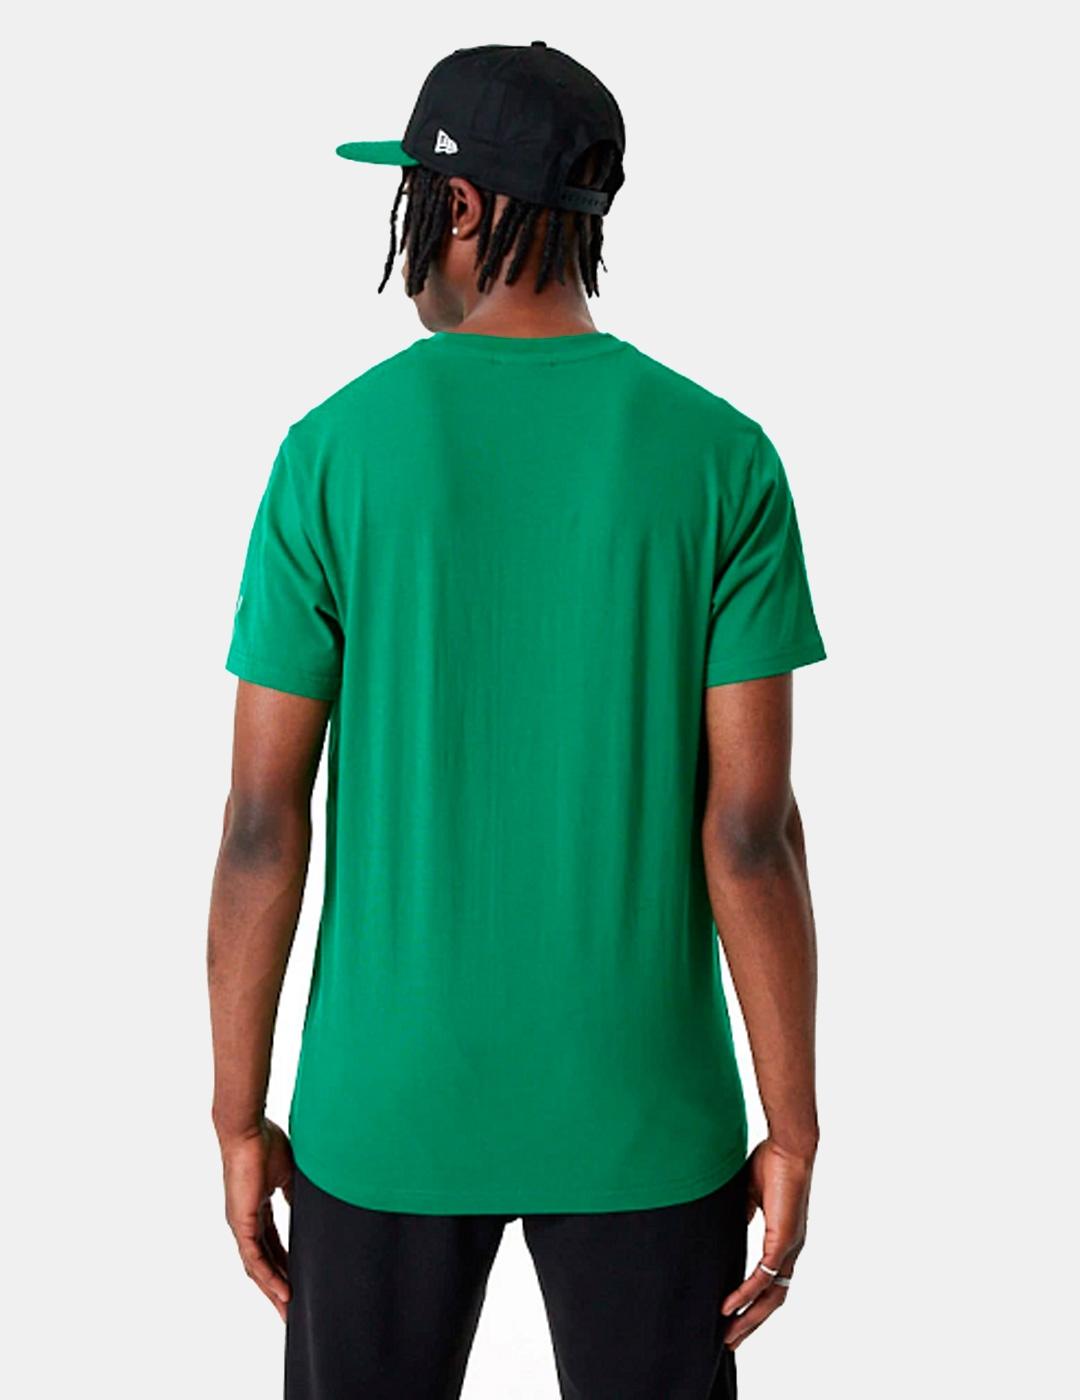 Camiseta NEW ERA GRAPHIC BOSTON CELTICS - Green